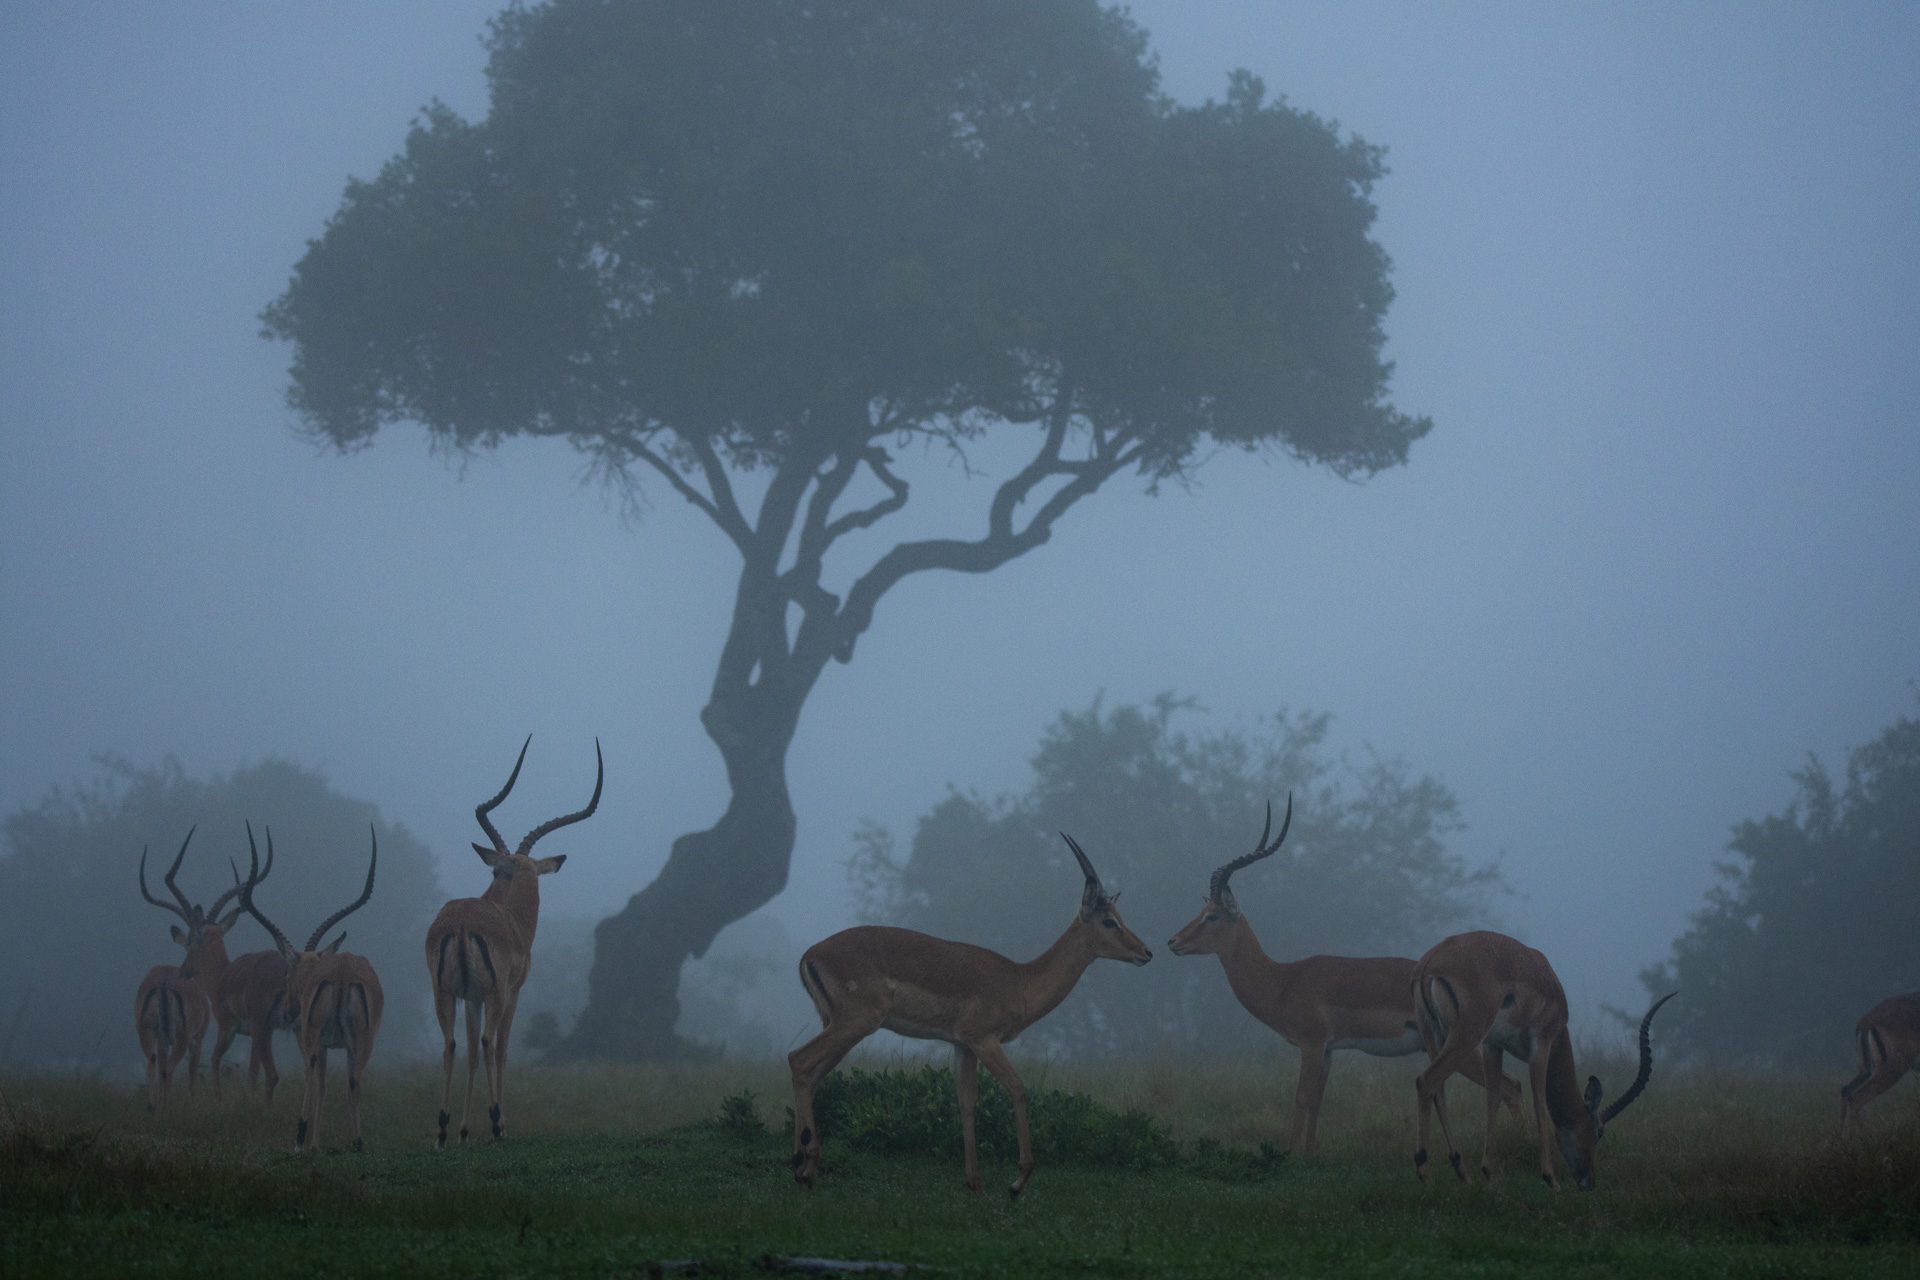 Impalas in the mist